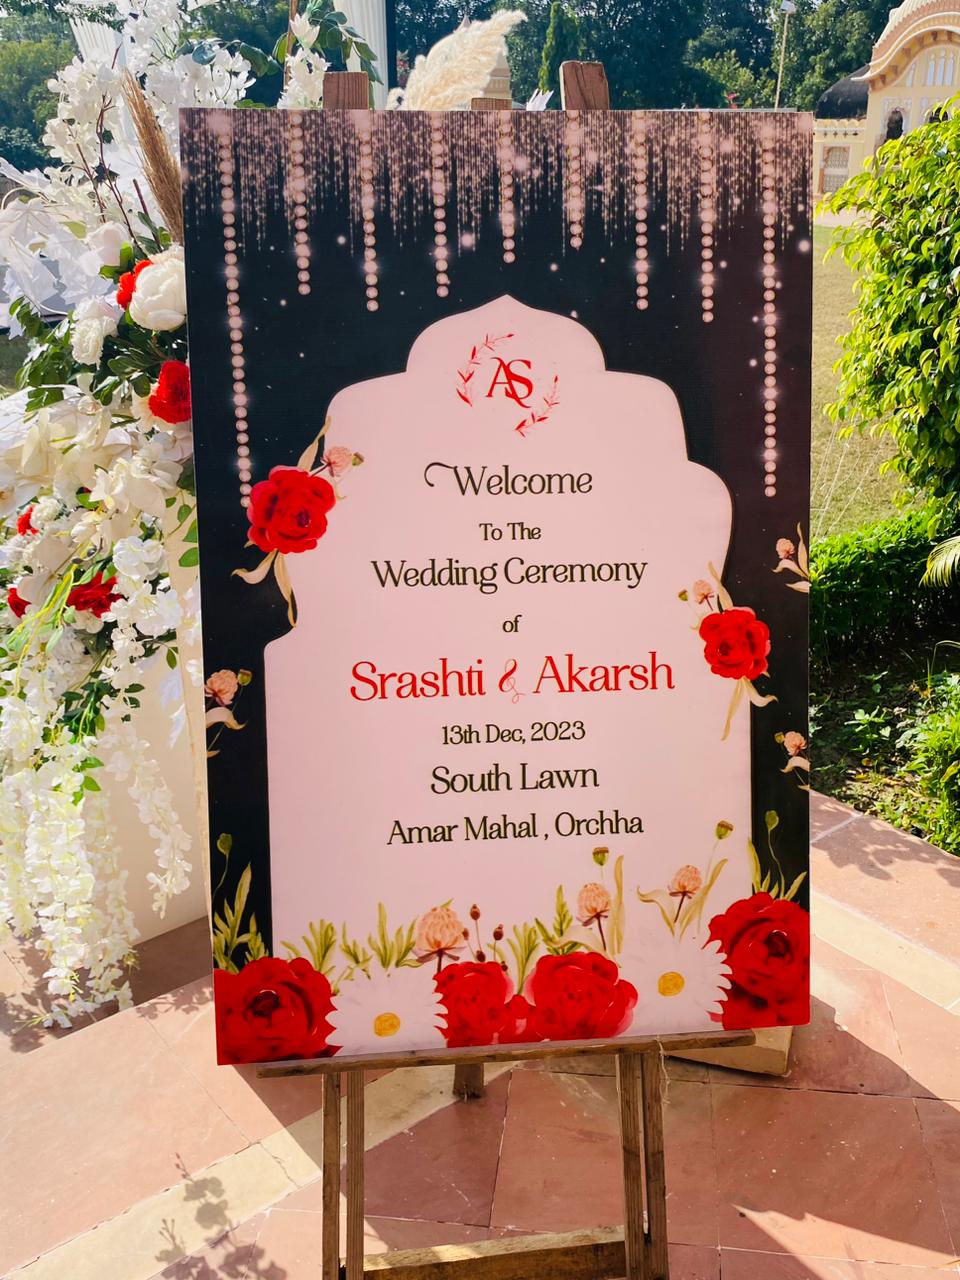 Shrashti & Akarsh Wedding welcome Standee